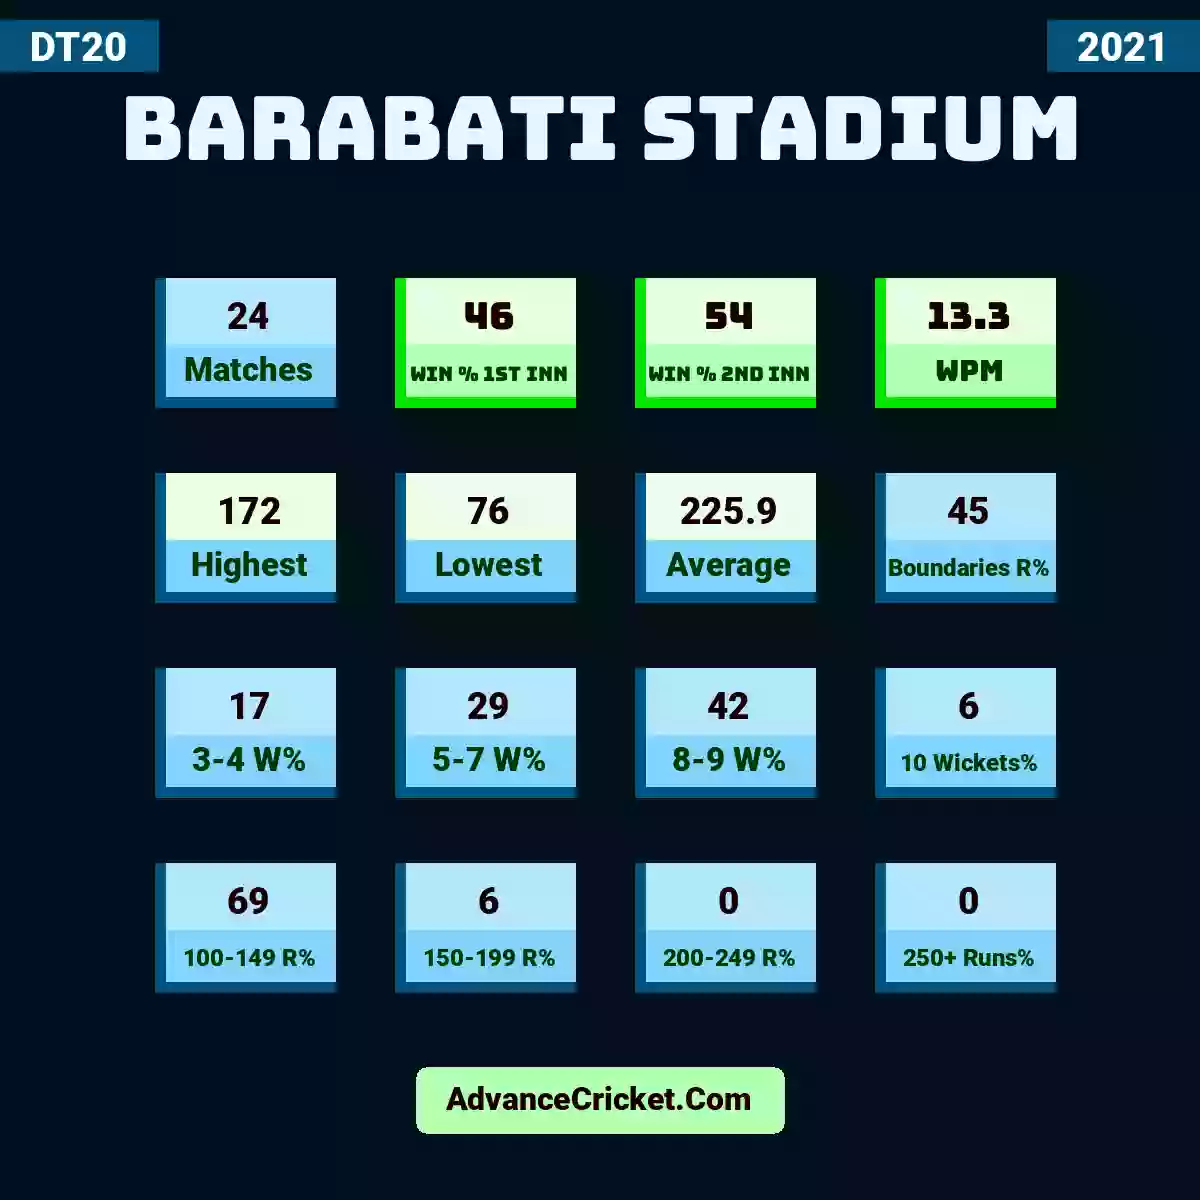 Image showing Barabati Stadium with Matches: 24, Win % 1st Inn: 46, Win % 2nd Inn: 54, WPM: 13.3, Highest: 172, Lowest: 76, Average: 225.9, Boundaries R%: 45, 3-4 W%: 17, 5-7 W%: 29, 8-9 W%: 42, 10 Wickets%: 6, 100-149 R%: 69, 150-199 R%: 6, 200-249 R%: 0, 250+ Runs%: 0.